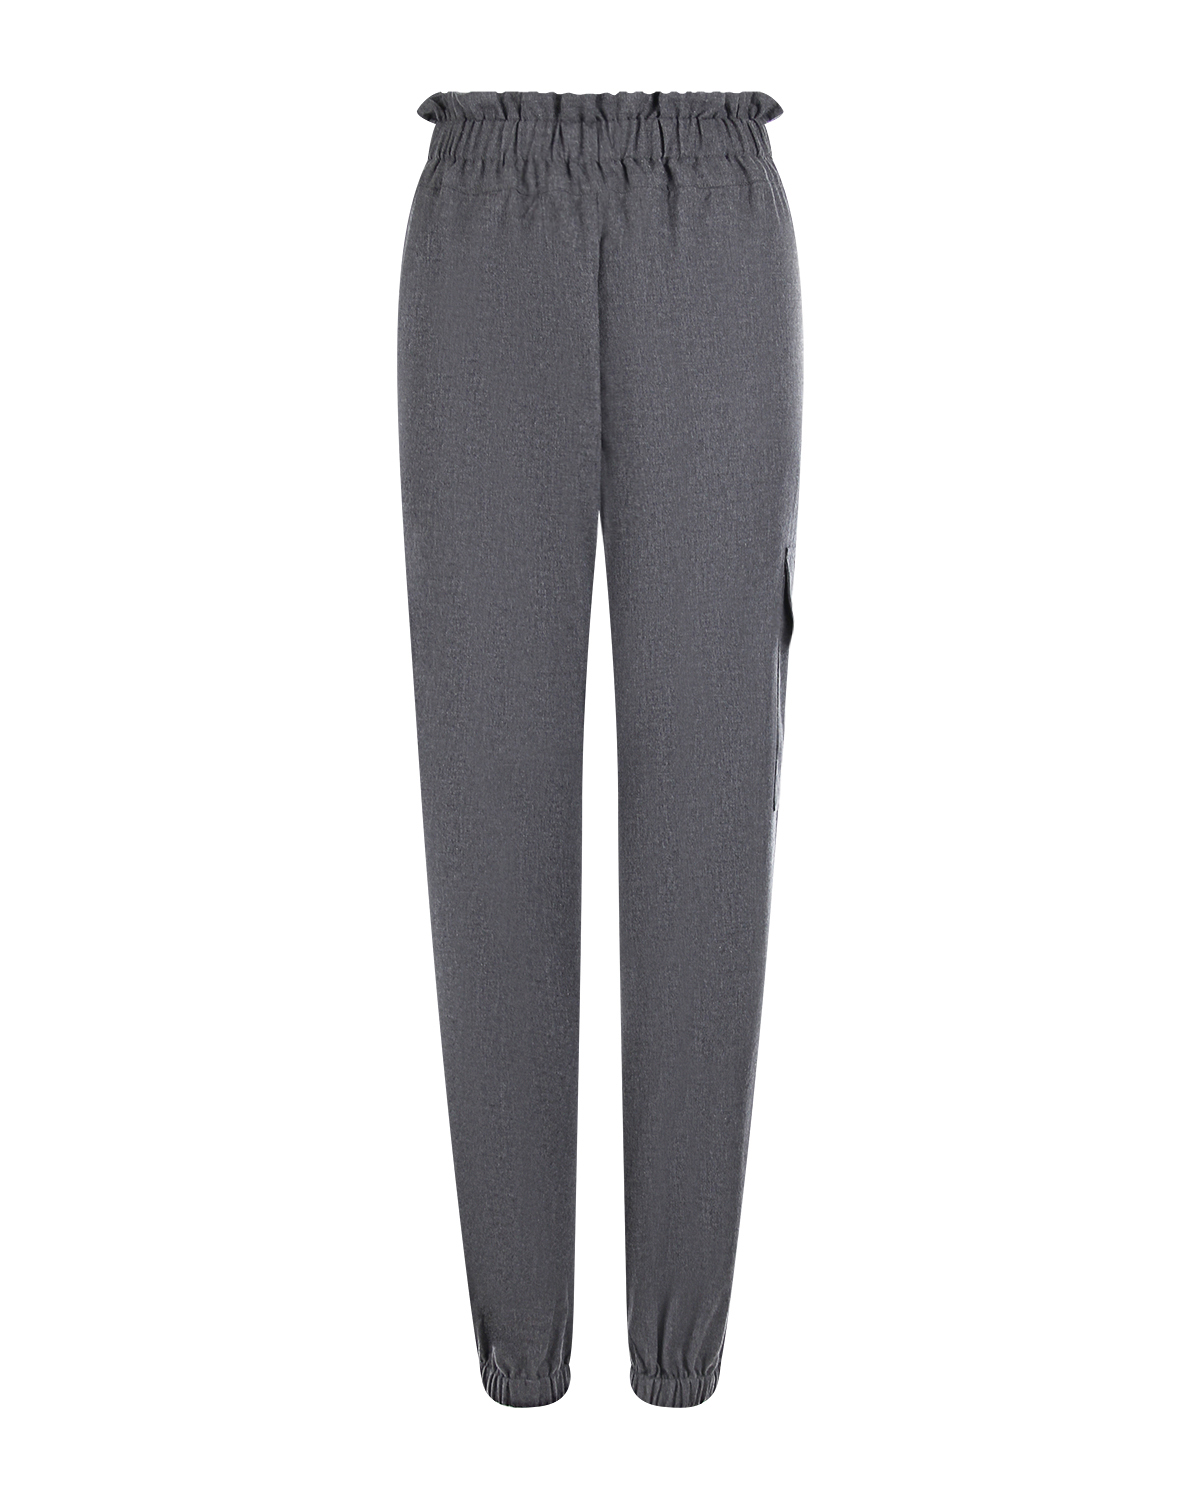 Серые брюки с карманом карго Forte dei Marmi Couture, размер 44, цвет серый - фото 1